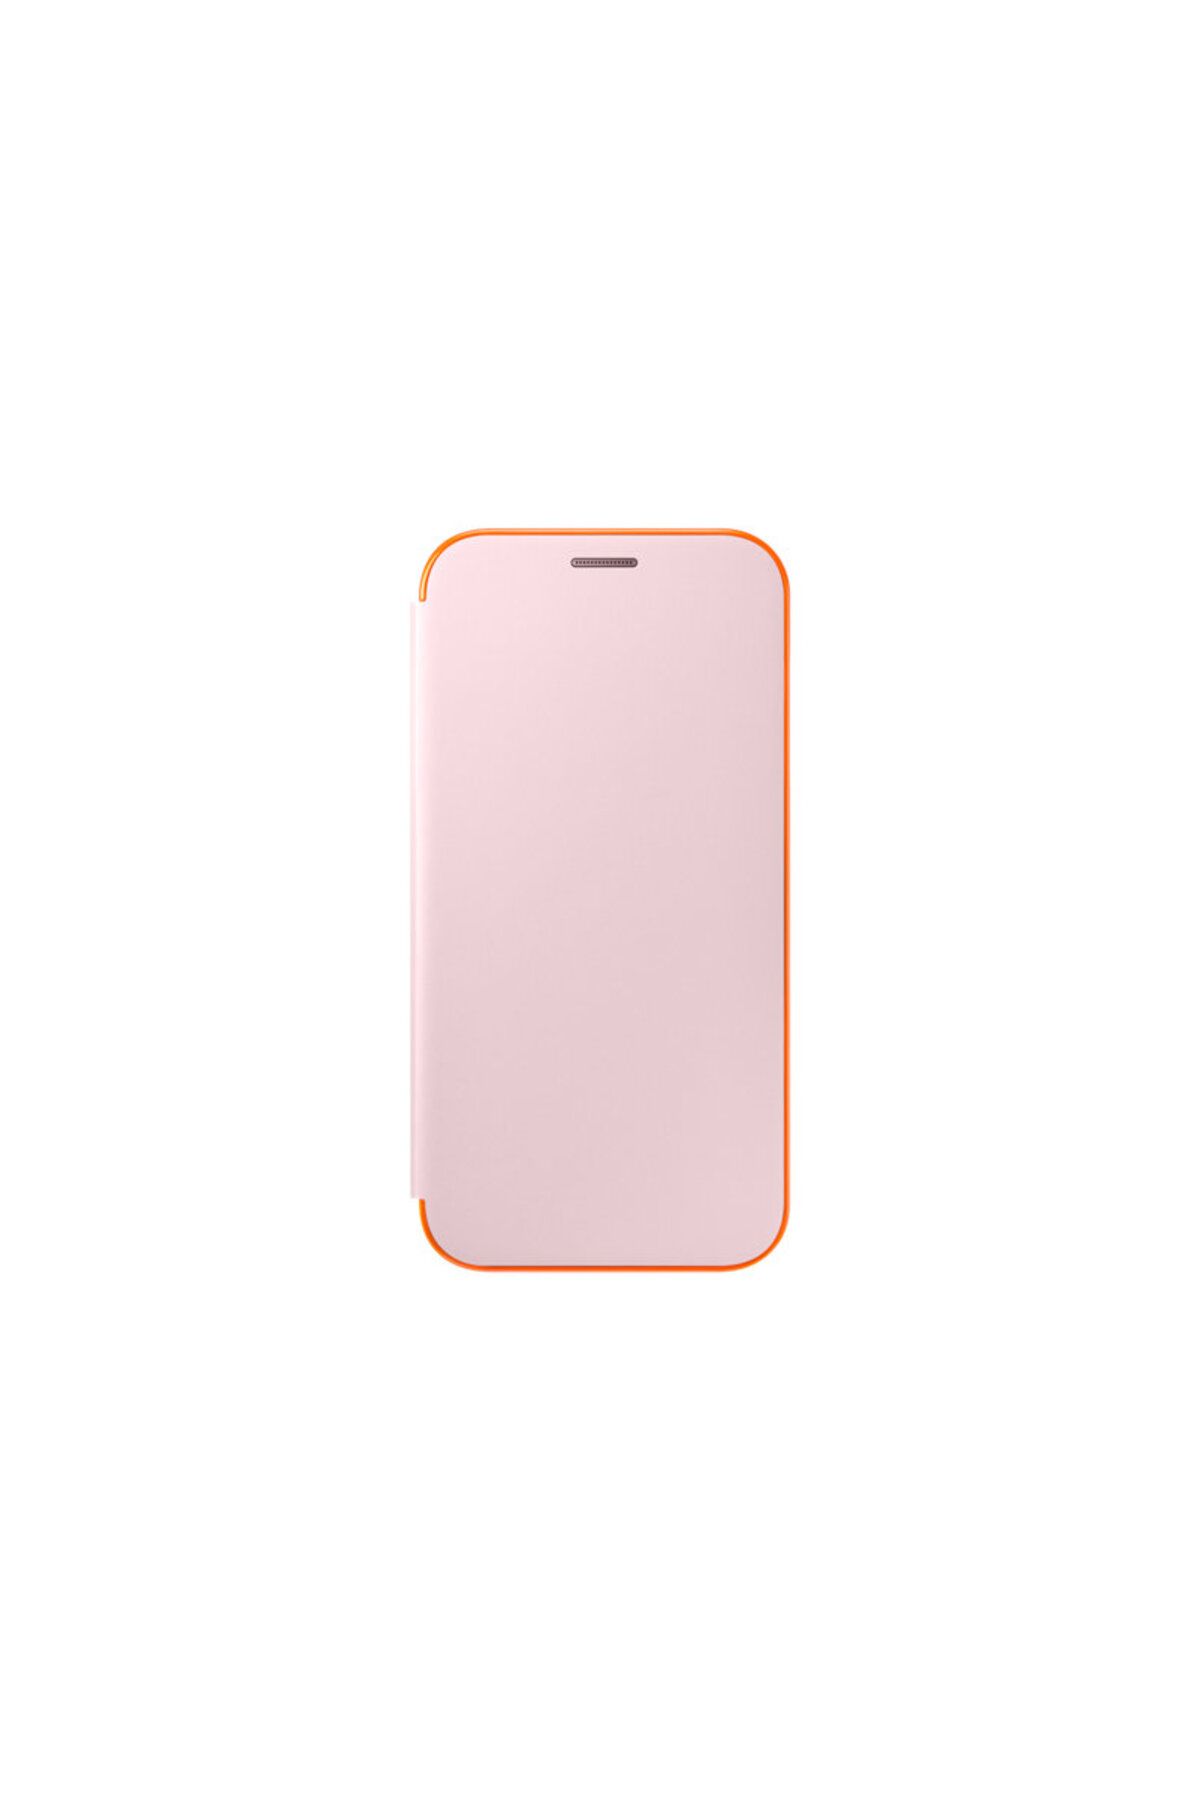 Samsung A7 (2017) Neon Flip Cover Kapaklı Kılıf Pembe - EF-FA720PPEGWW